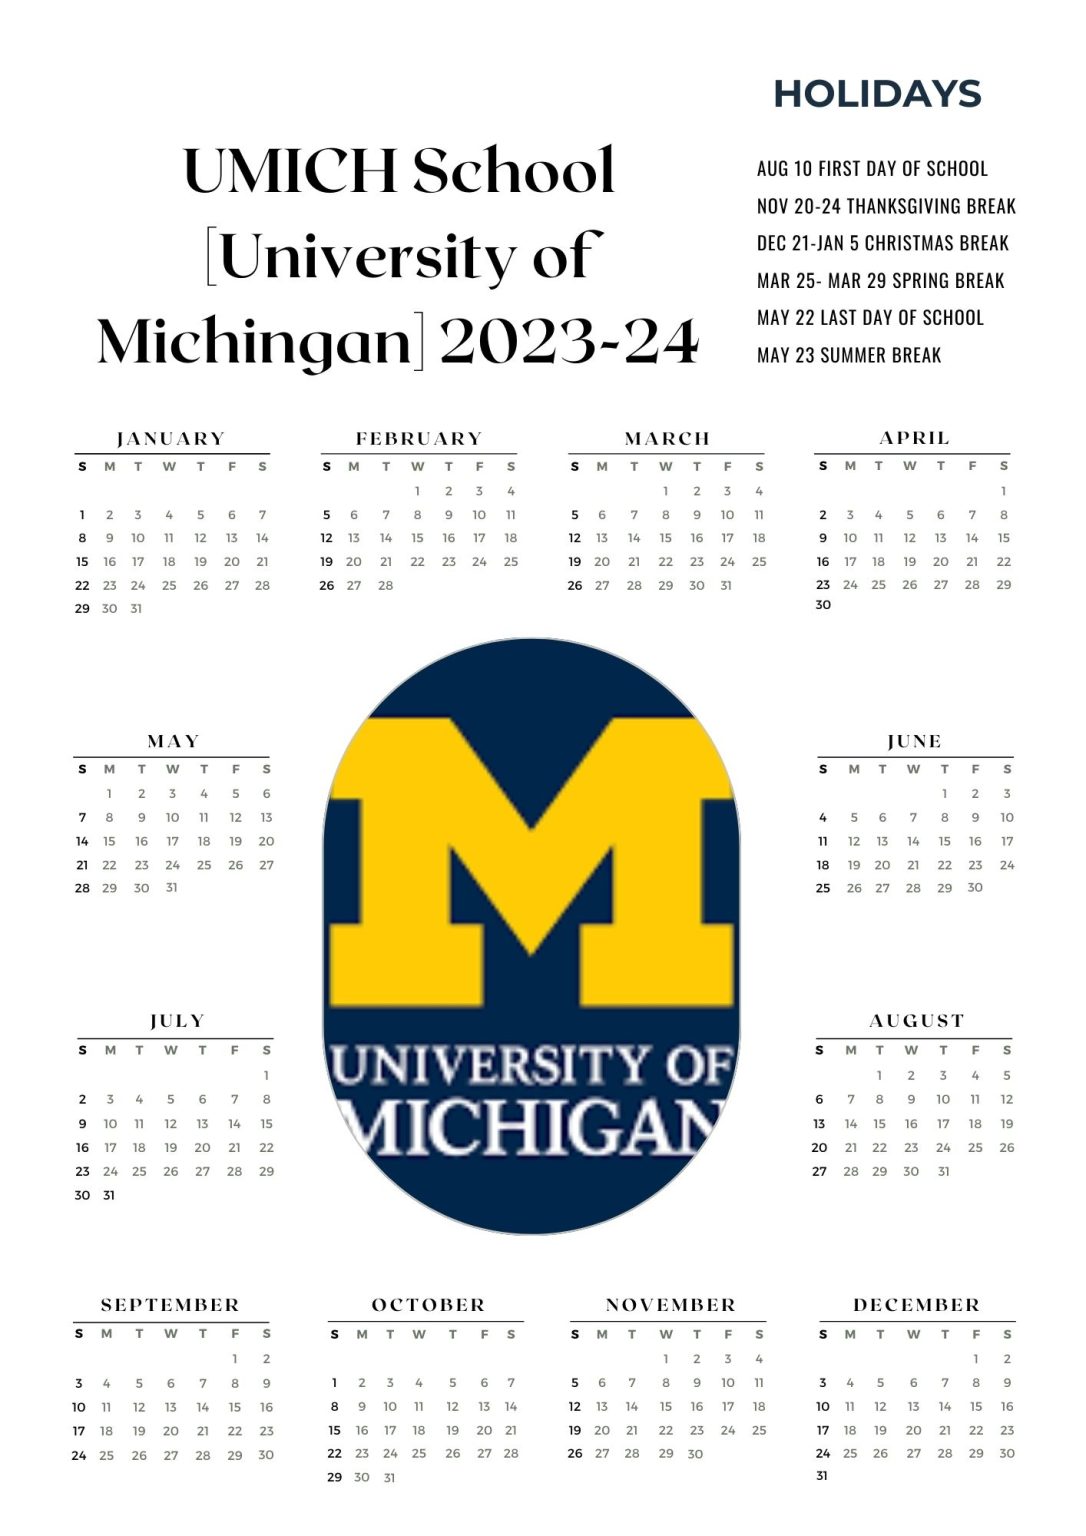 UMICH School Calendar Holidays 202324 [University Of Michigan]